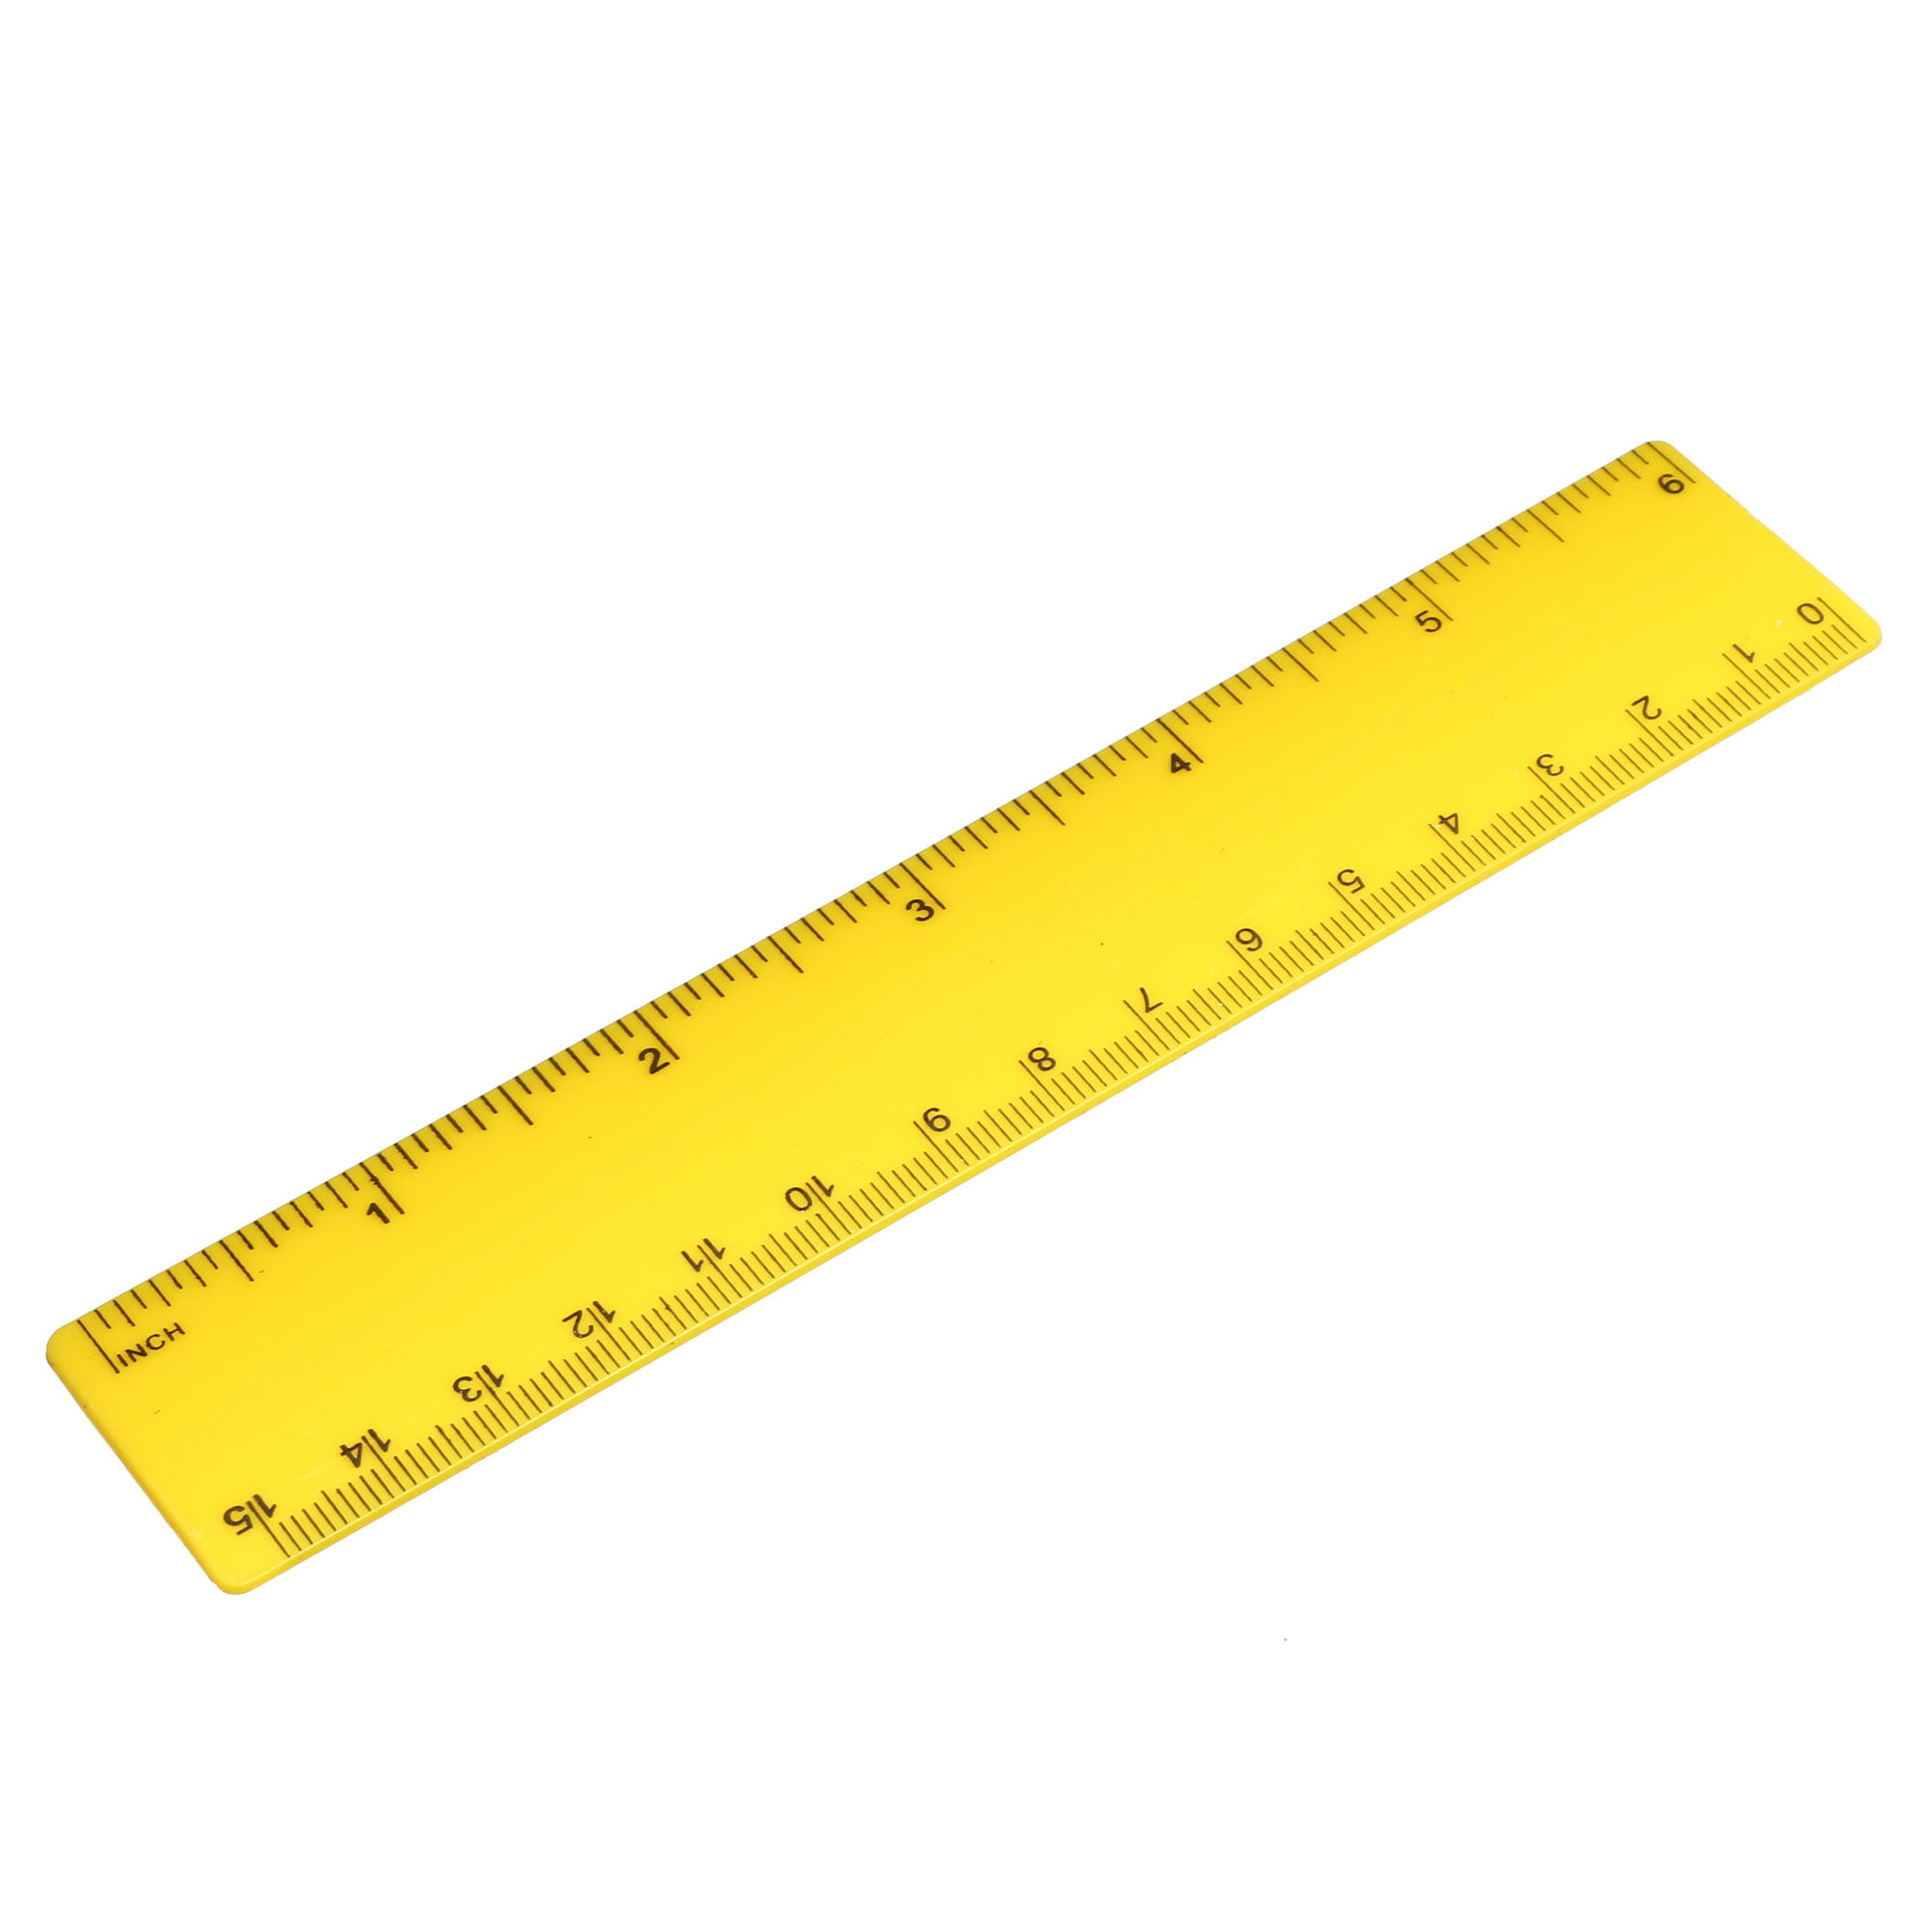 6 inch ruler